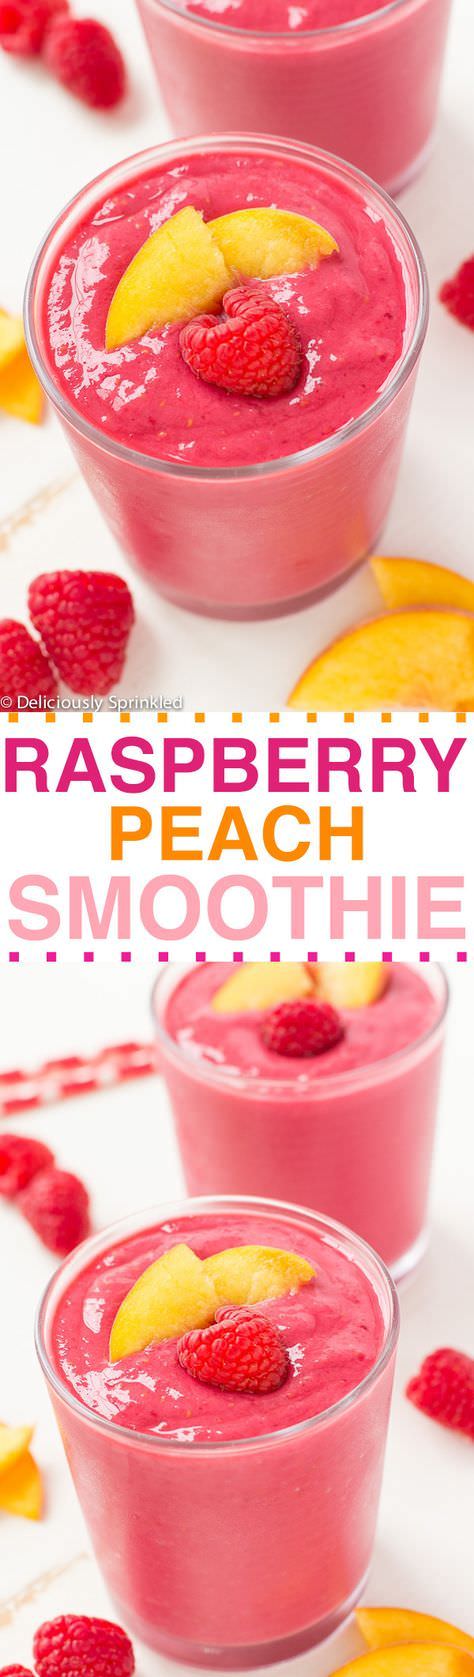 Raspberry Peach Smoothie ⋆ Food Curation